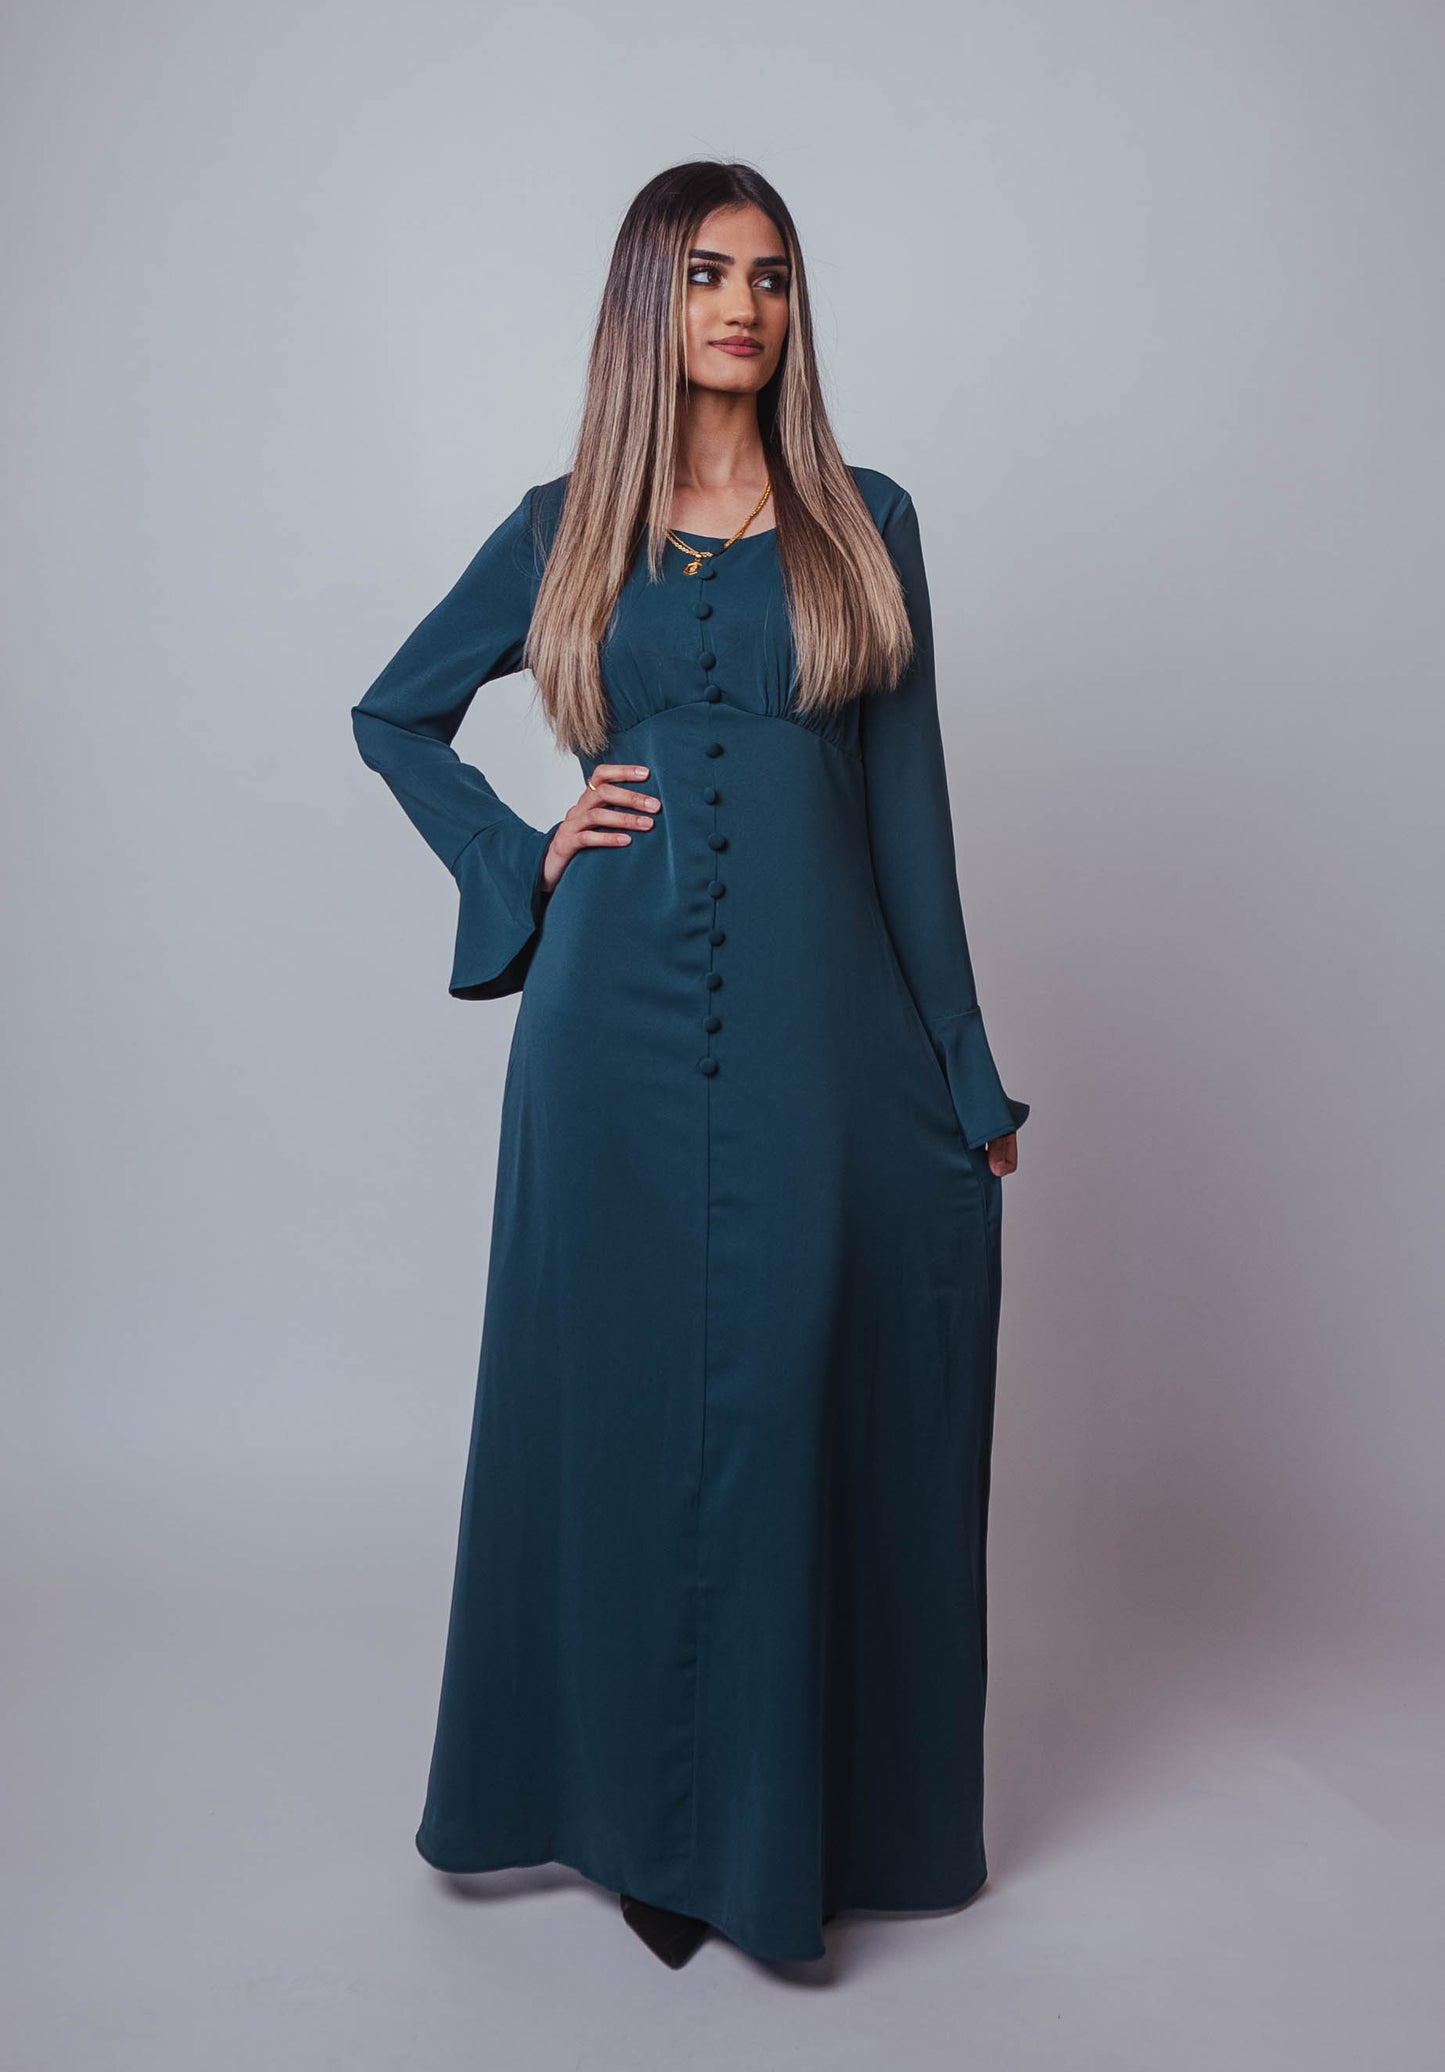 Zara Button Maxi Dress - Teal